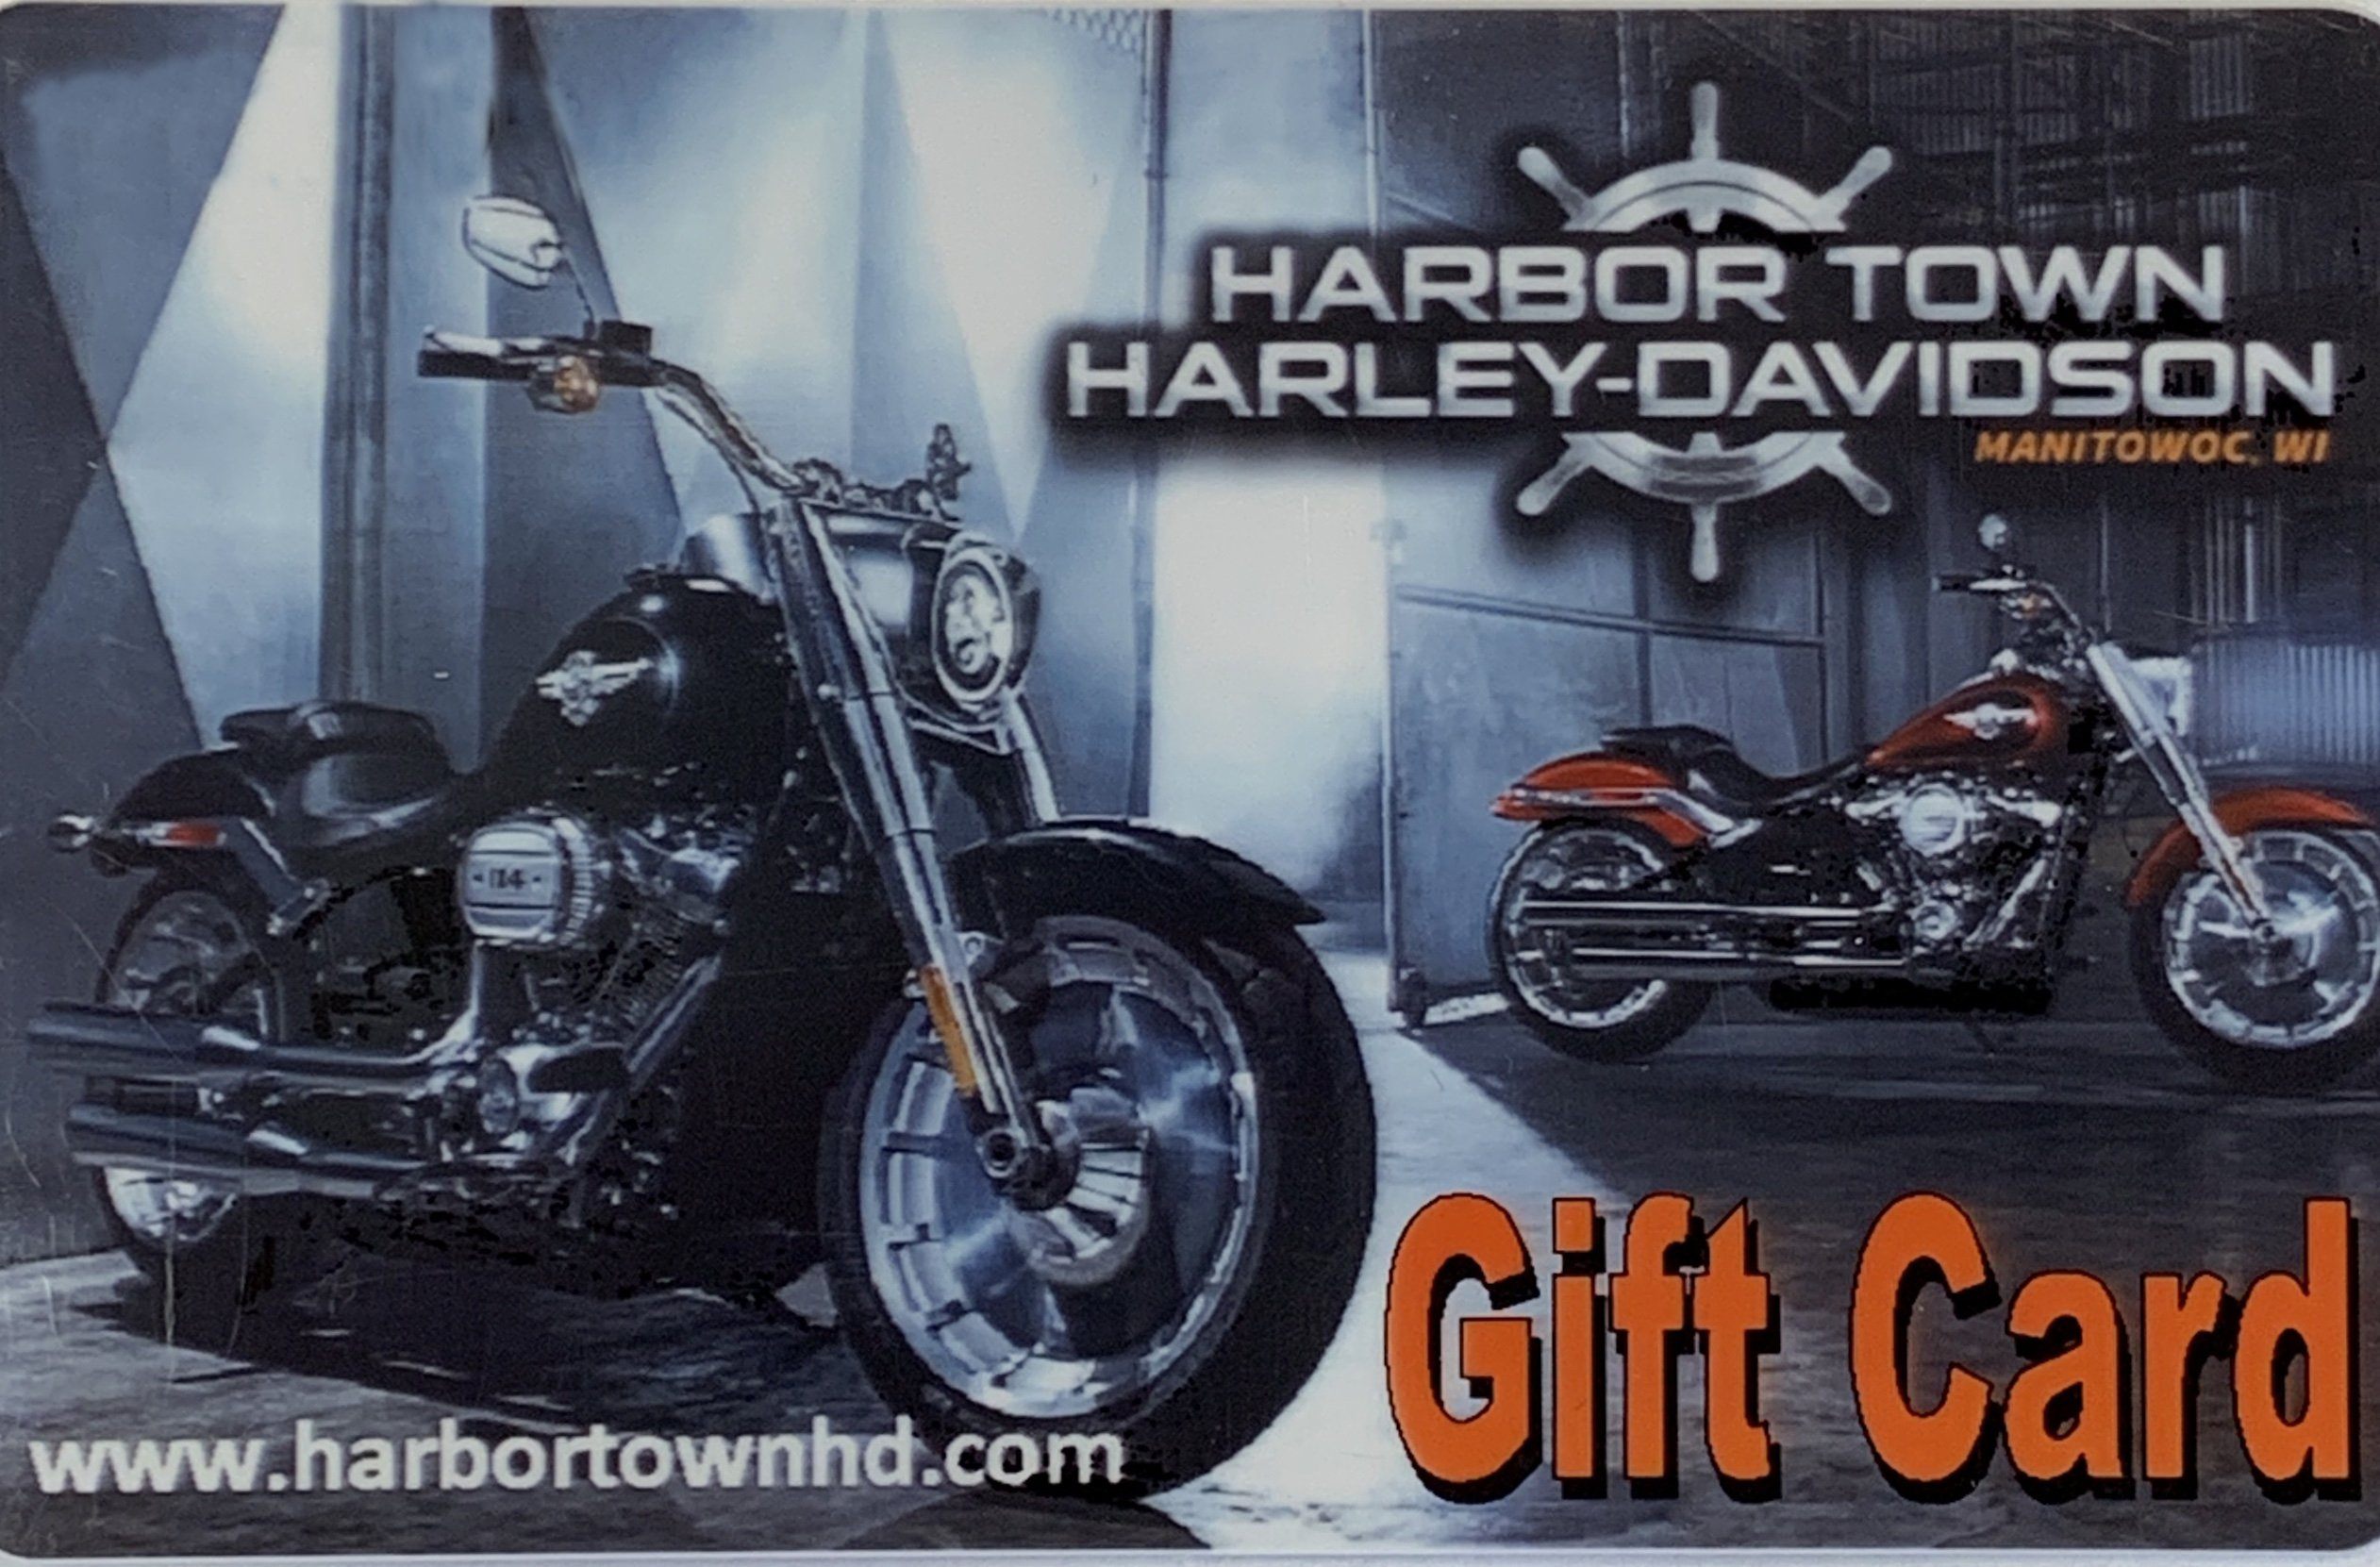 Harbor Town Harley-Davidson Gift Card